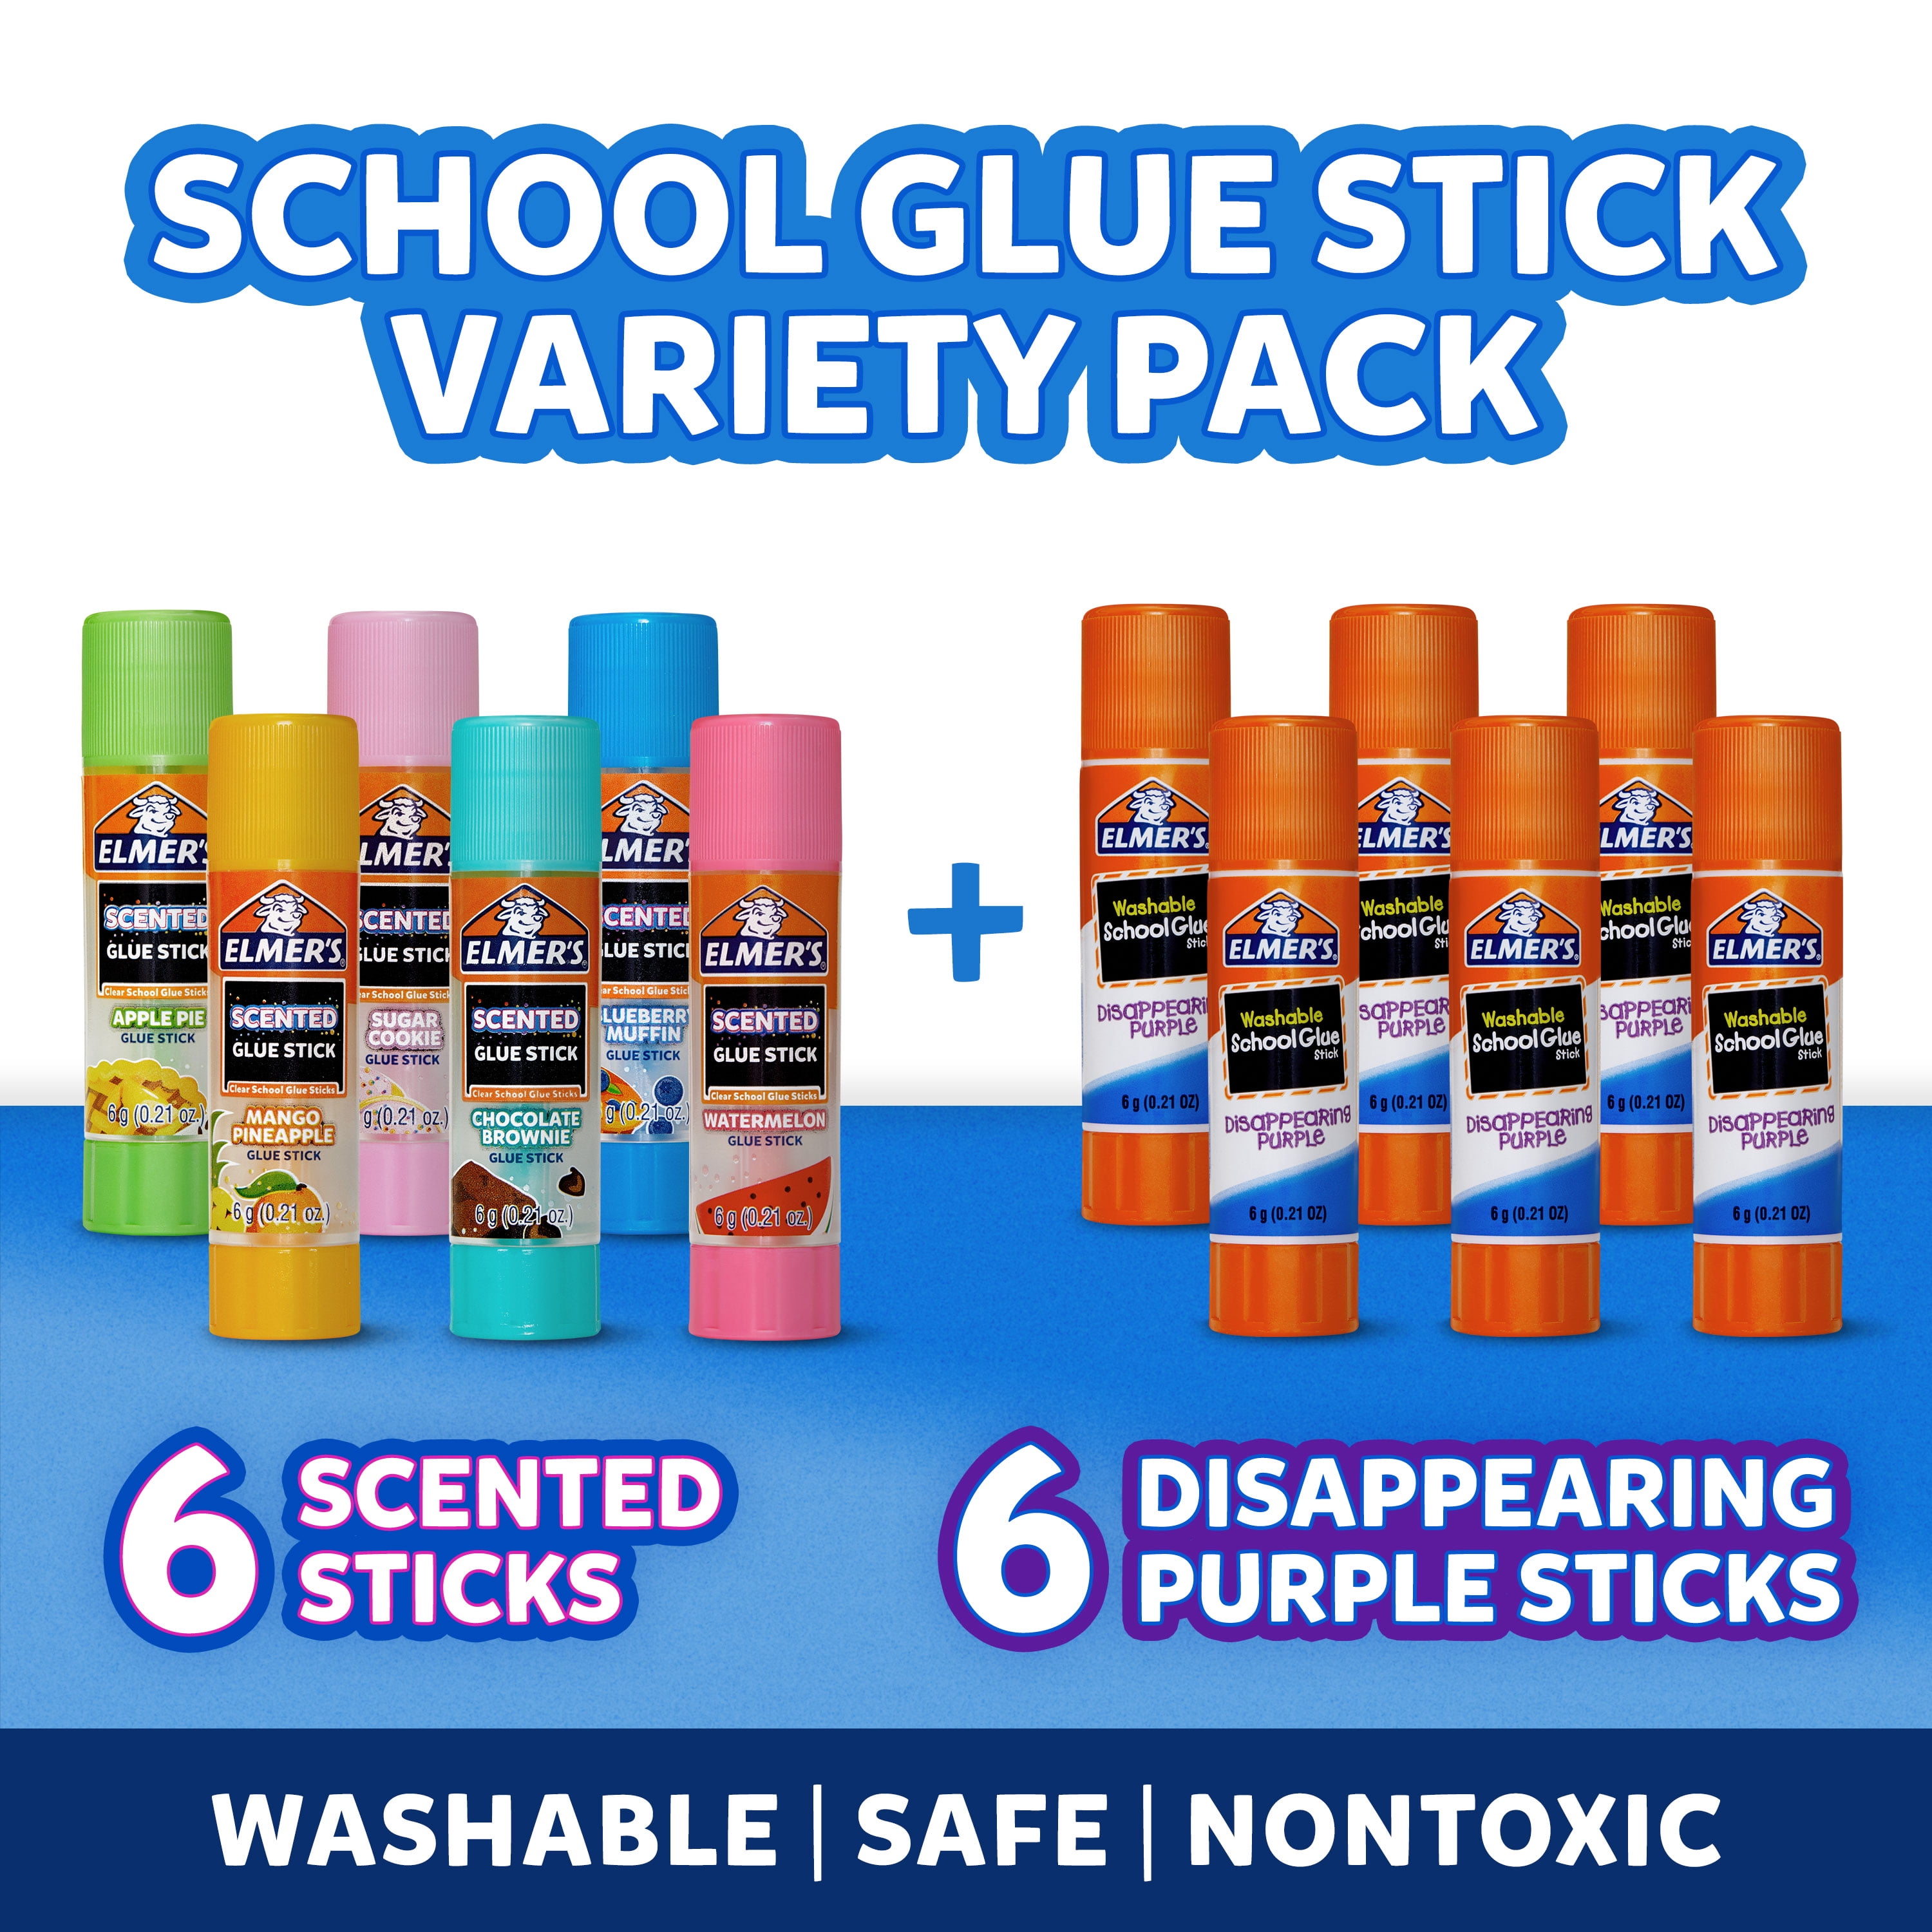 Elmer's Giant Scented Glue Sticks Variety Pack, 22 Gram, 3 Count -  Walmart.com